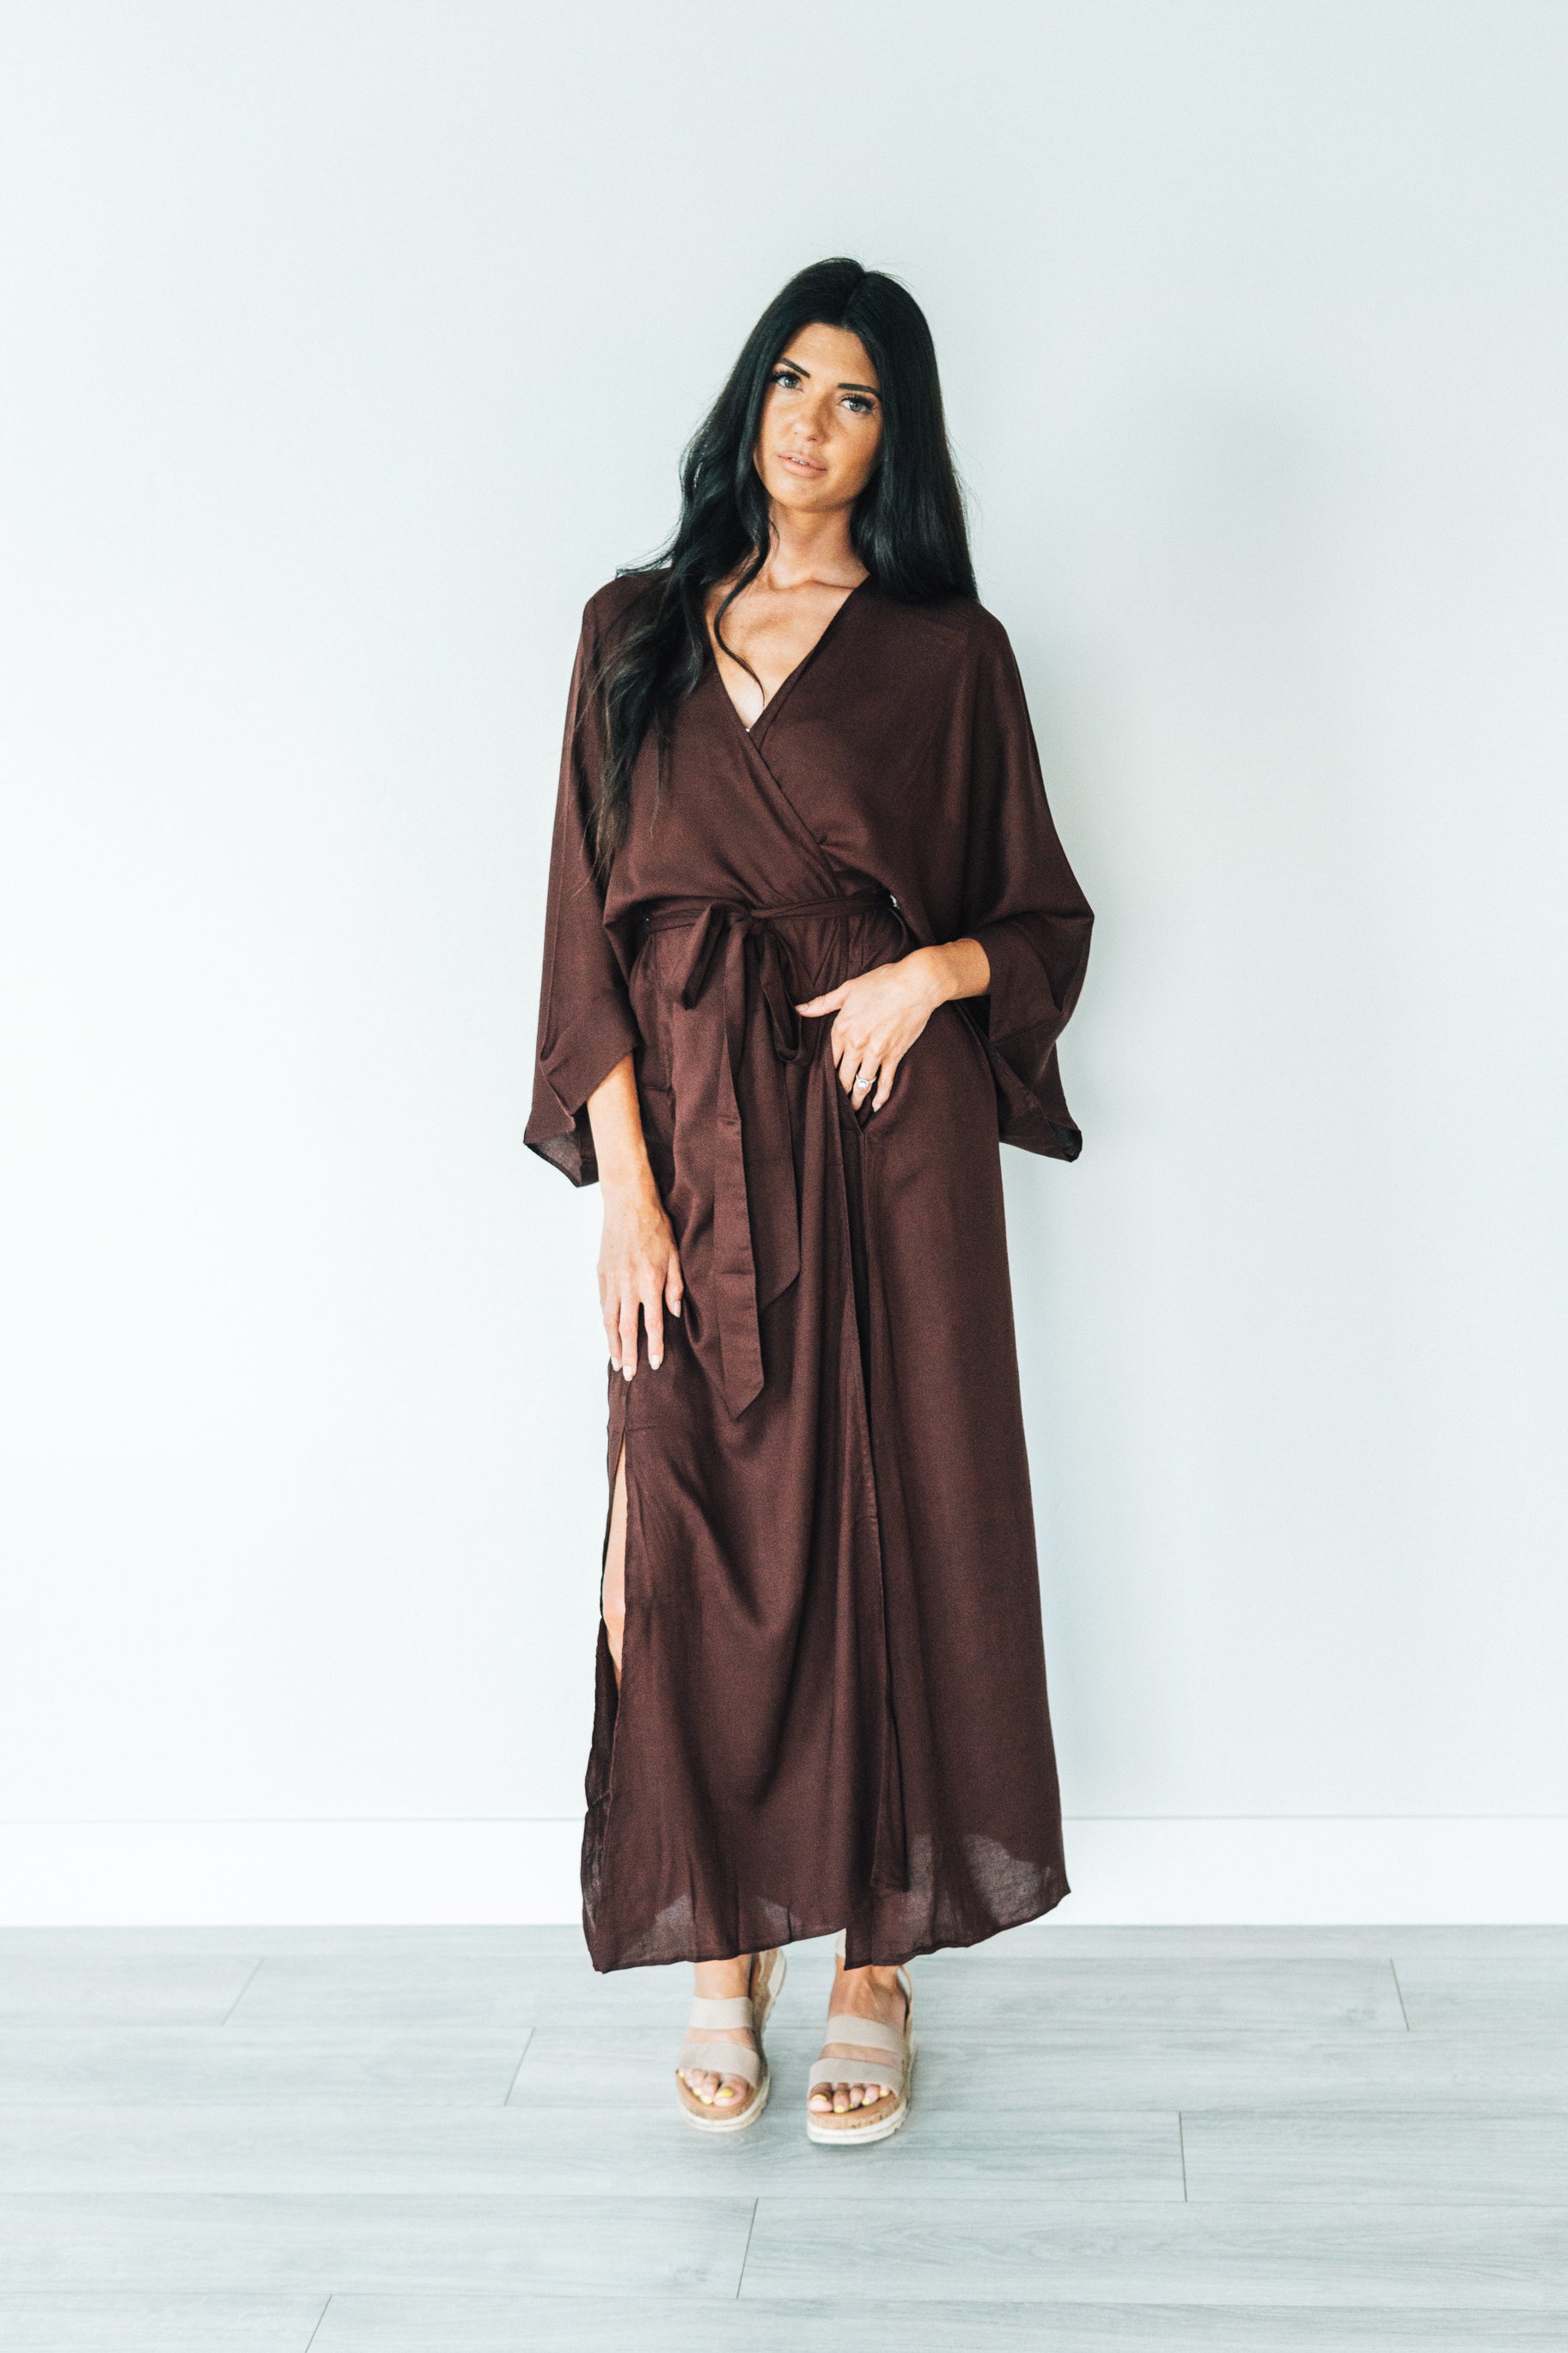 Cotton Kimono Wrap, Lightweight Summer Robe, Casual Chic Lounge Wear